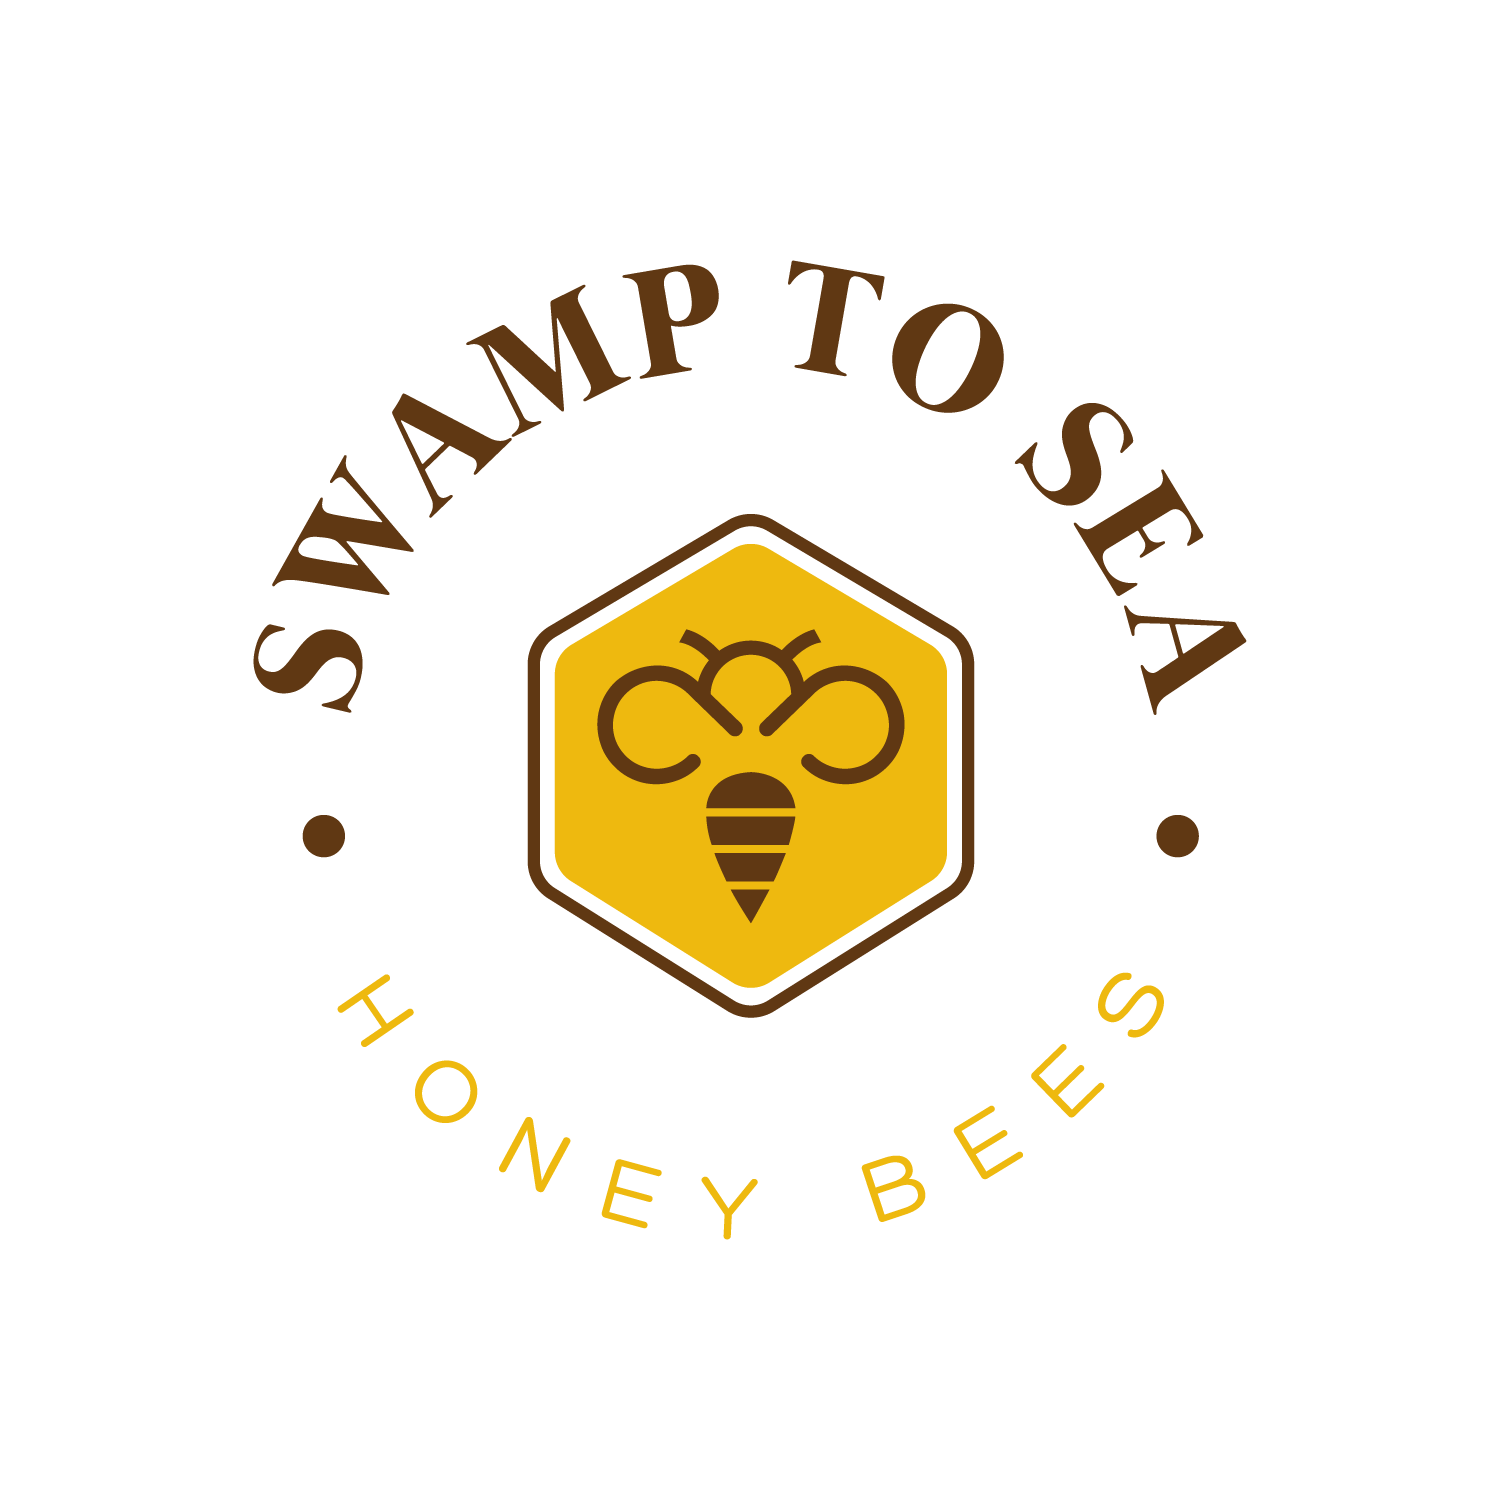 Swamp to Sea Honey Bees